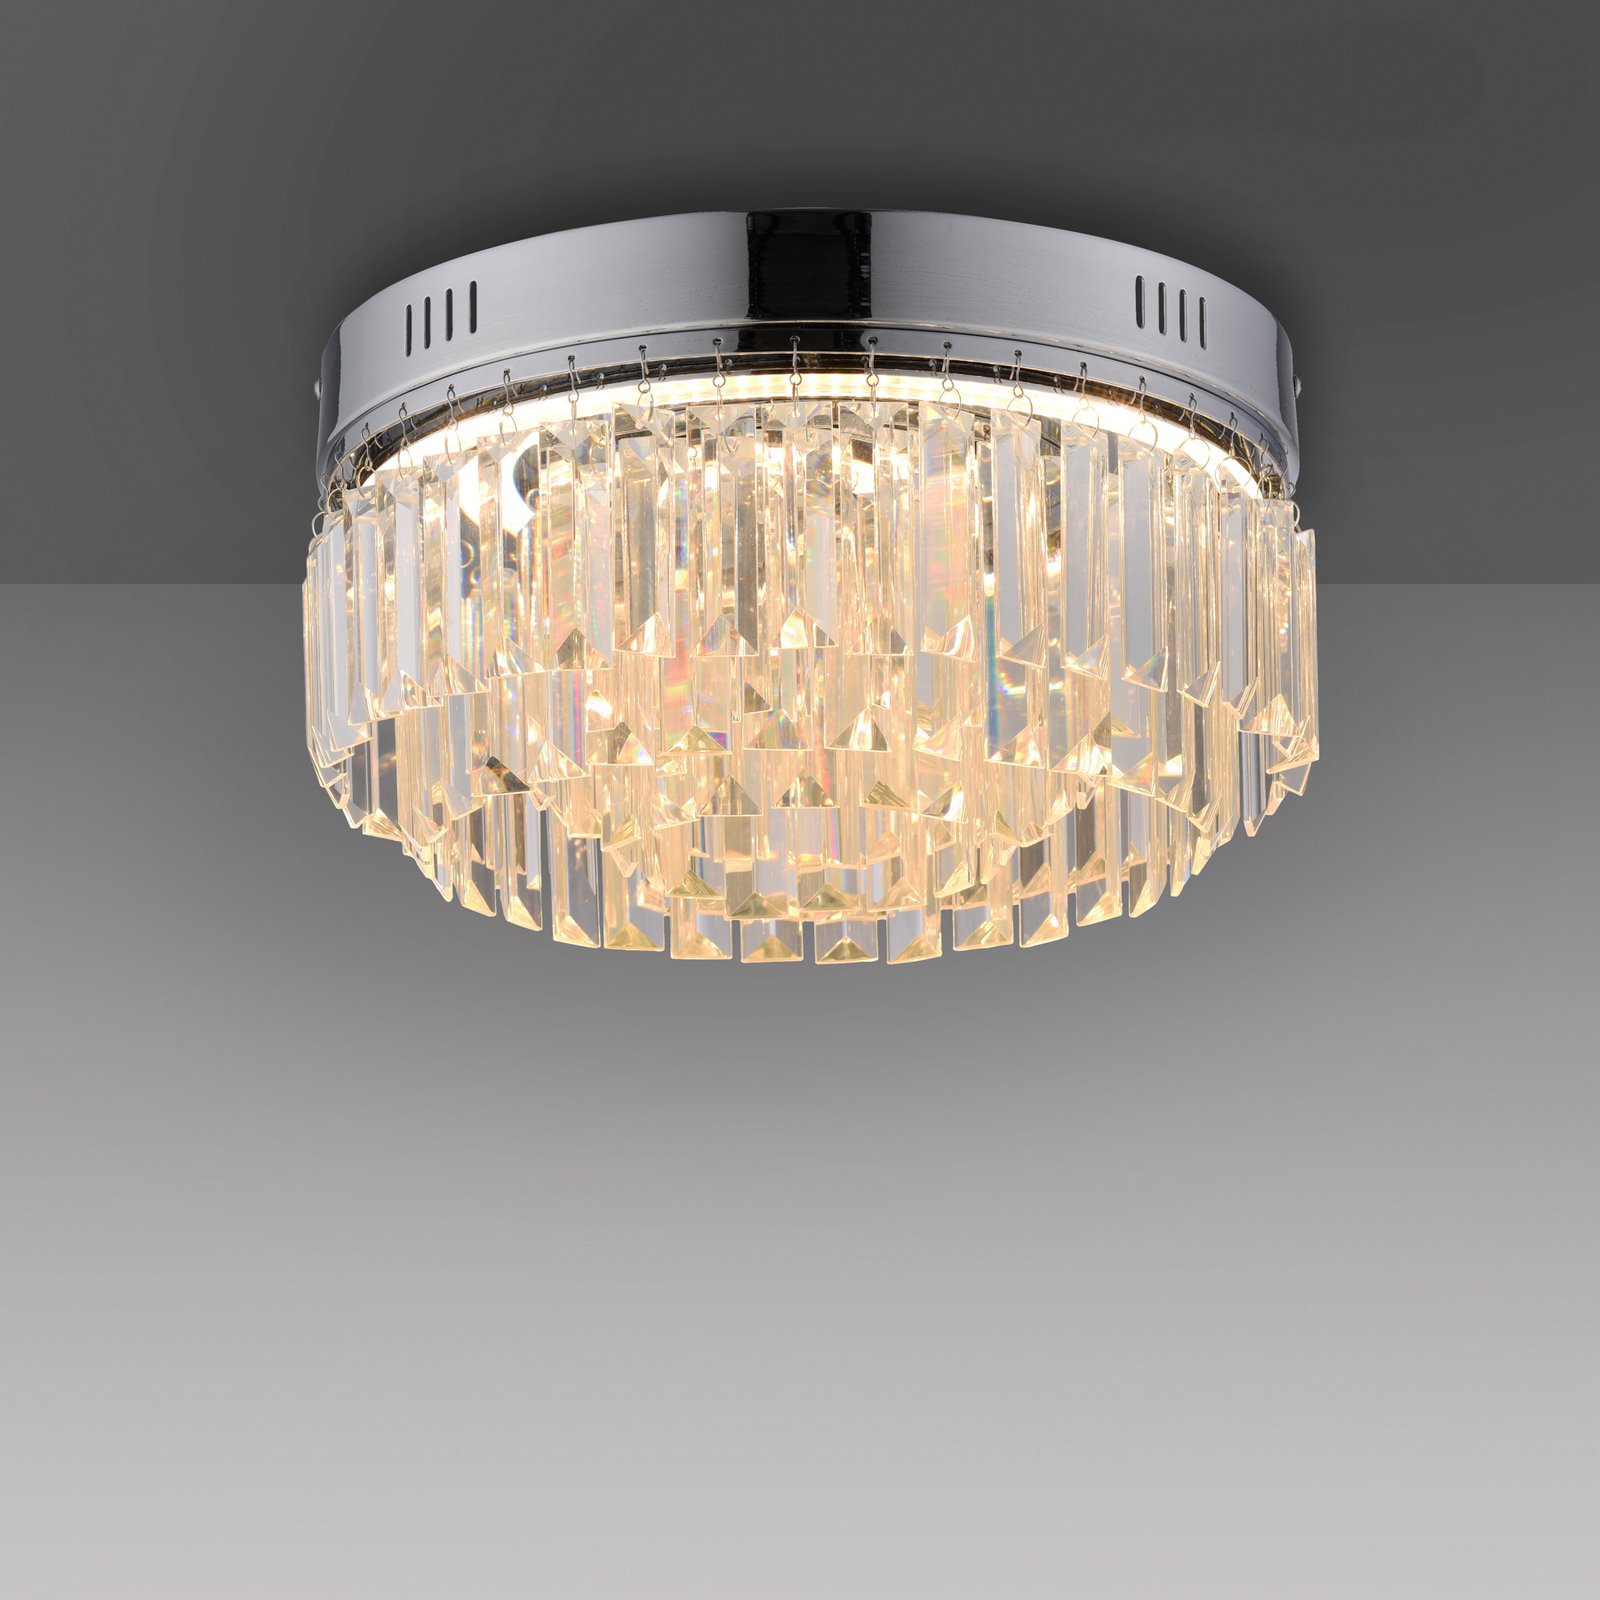 Paul Neuhaus Krista LED stropní svítidlo, SimplyDim